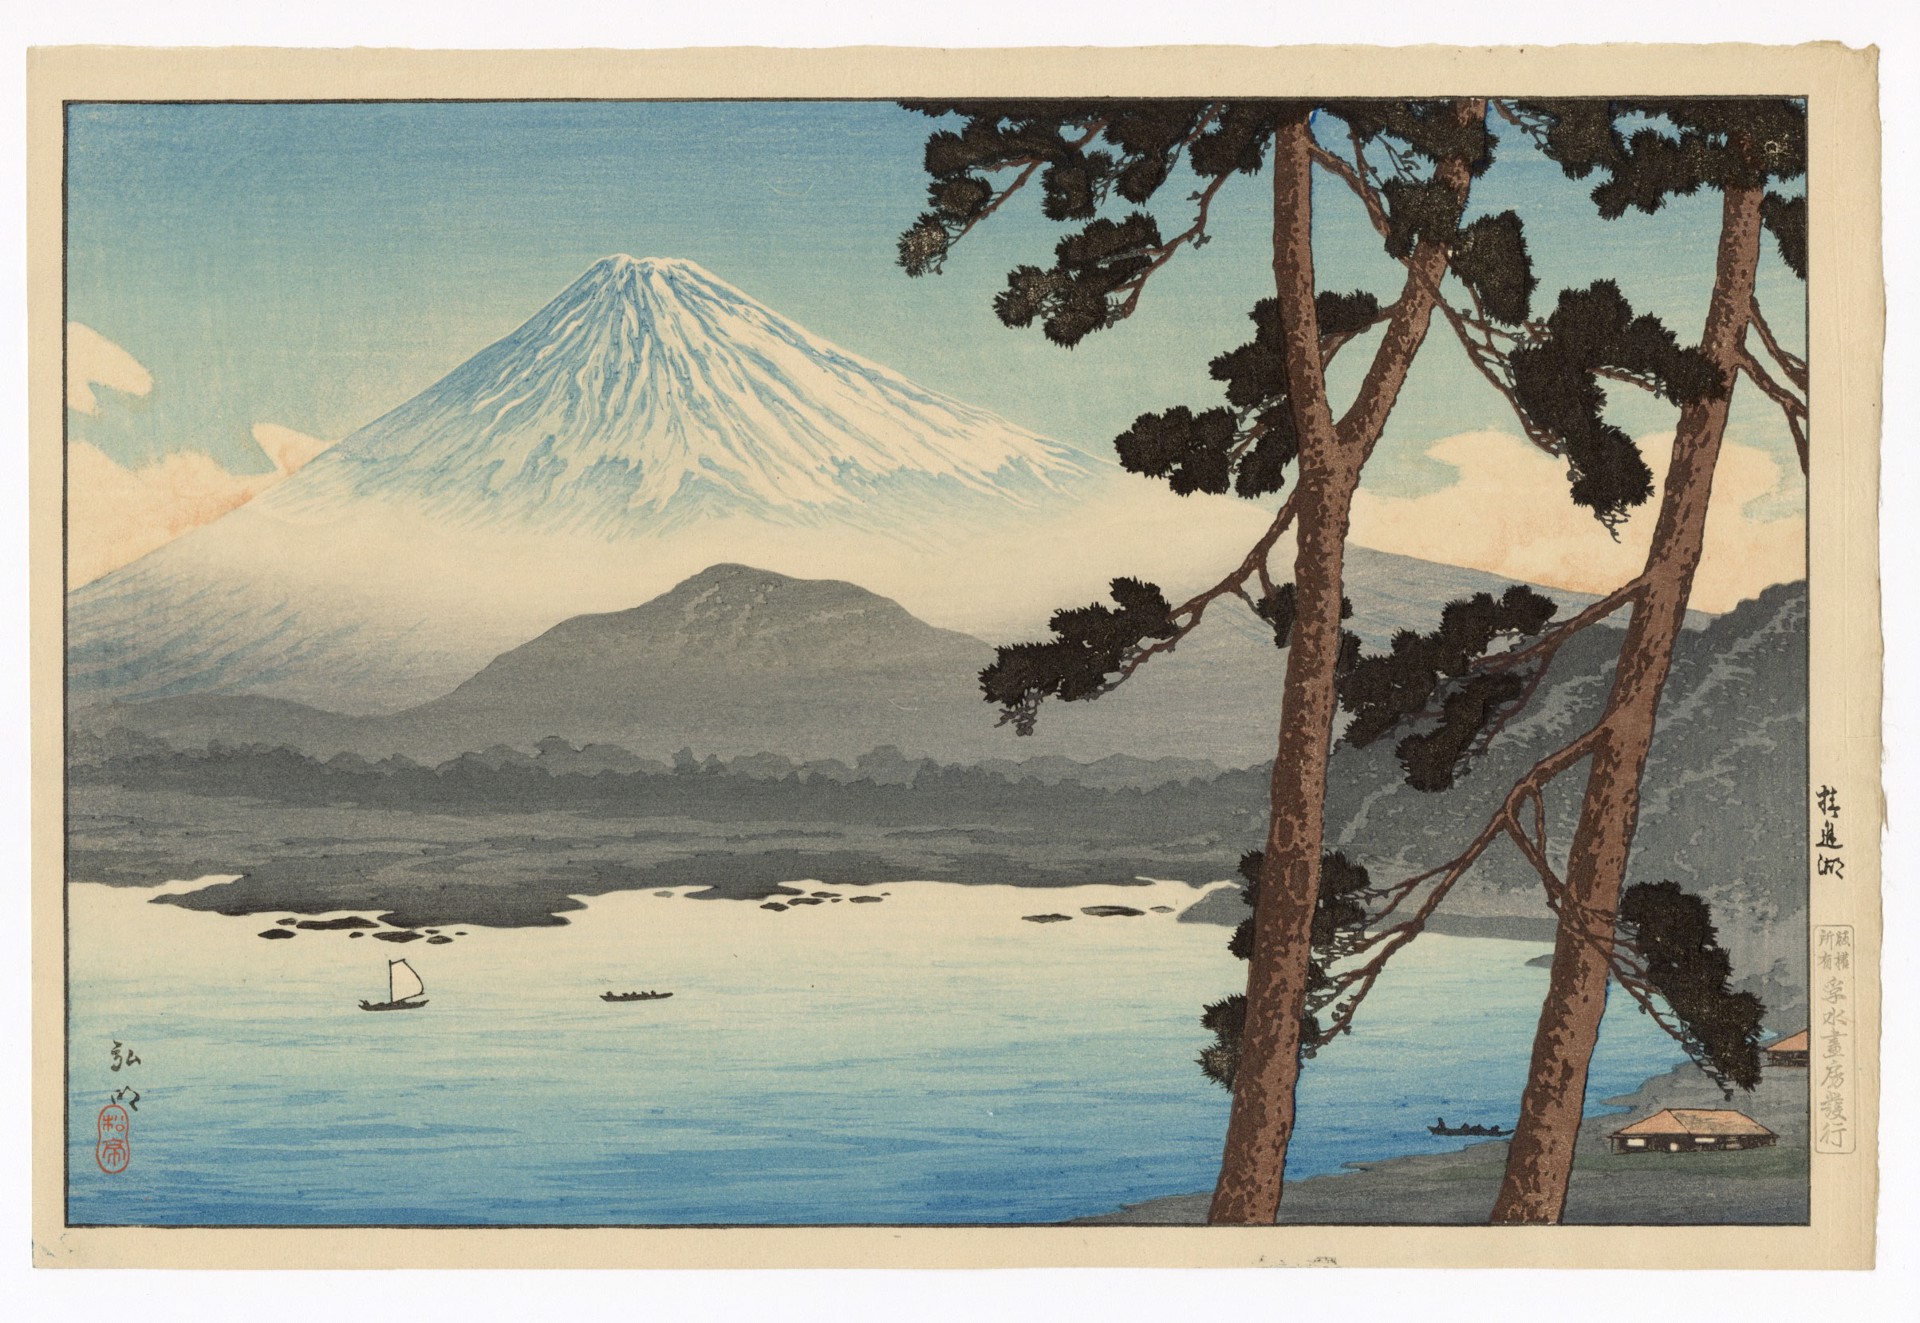 Lake Shojiko Mt. Fuji in the Four Seasons by Takahashi Hiroaki